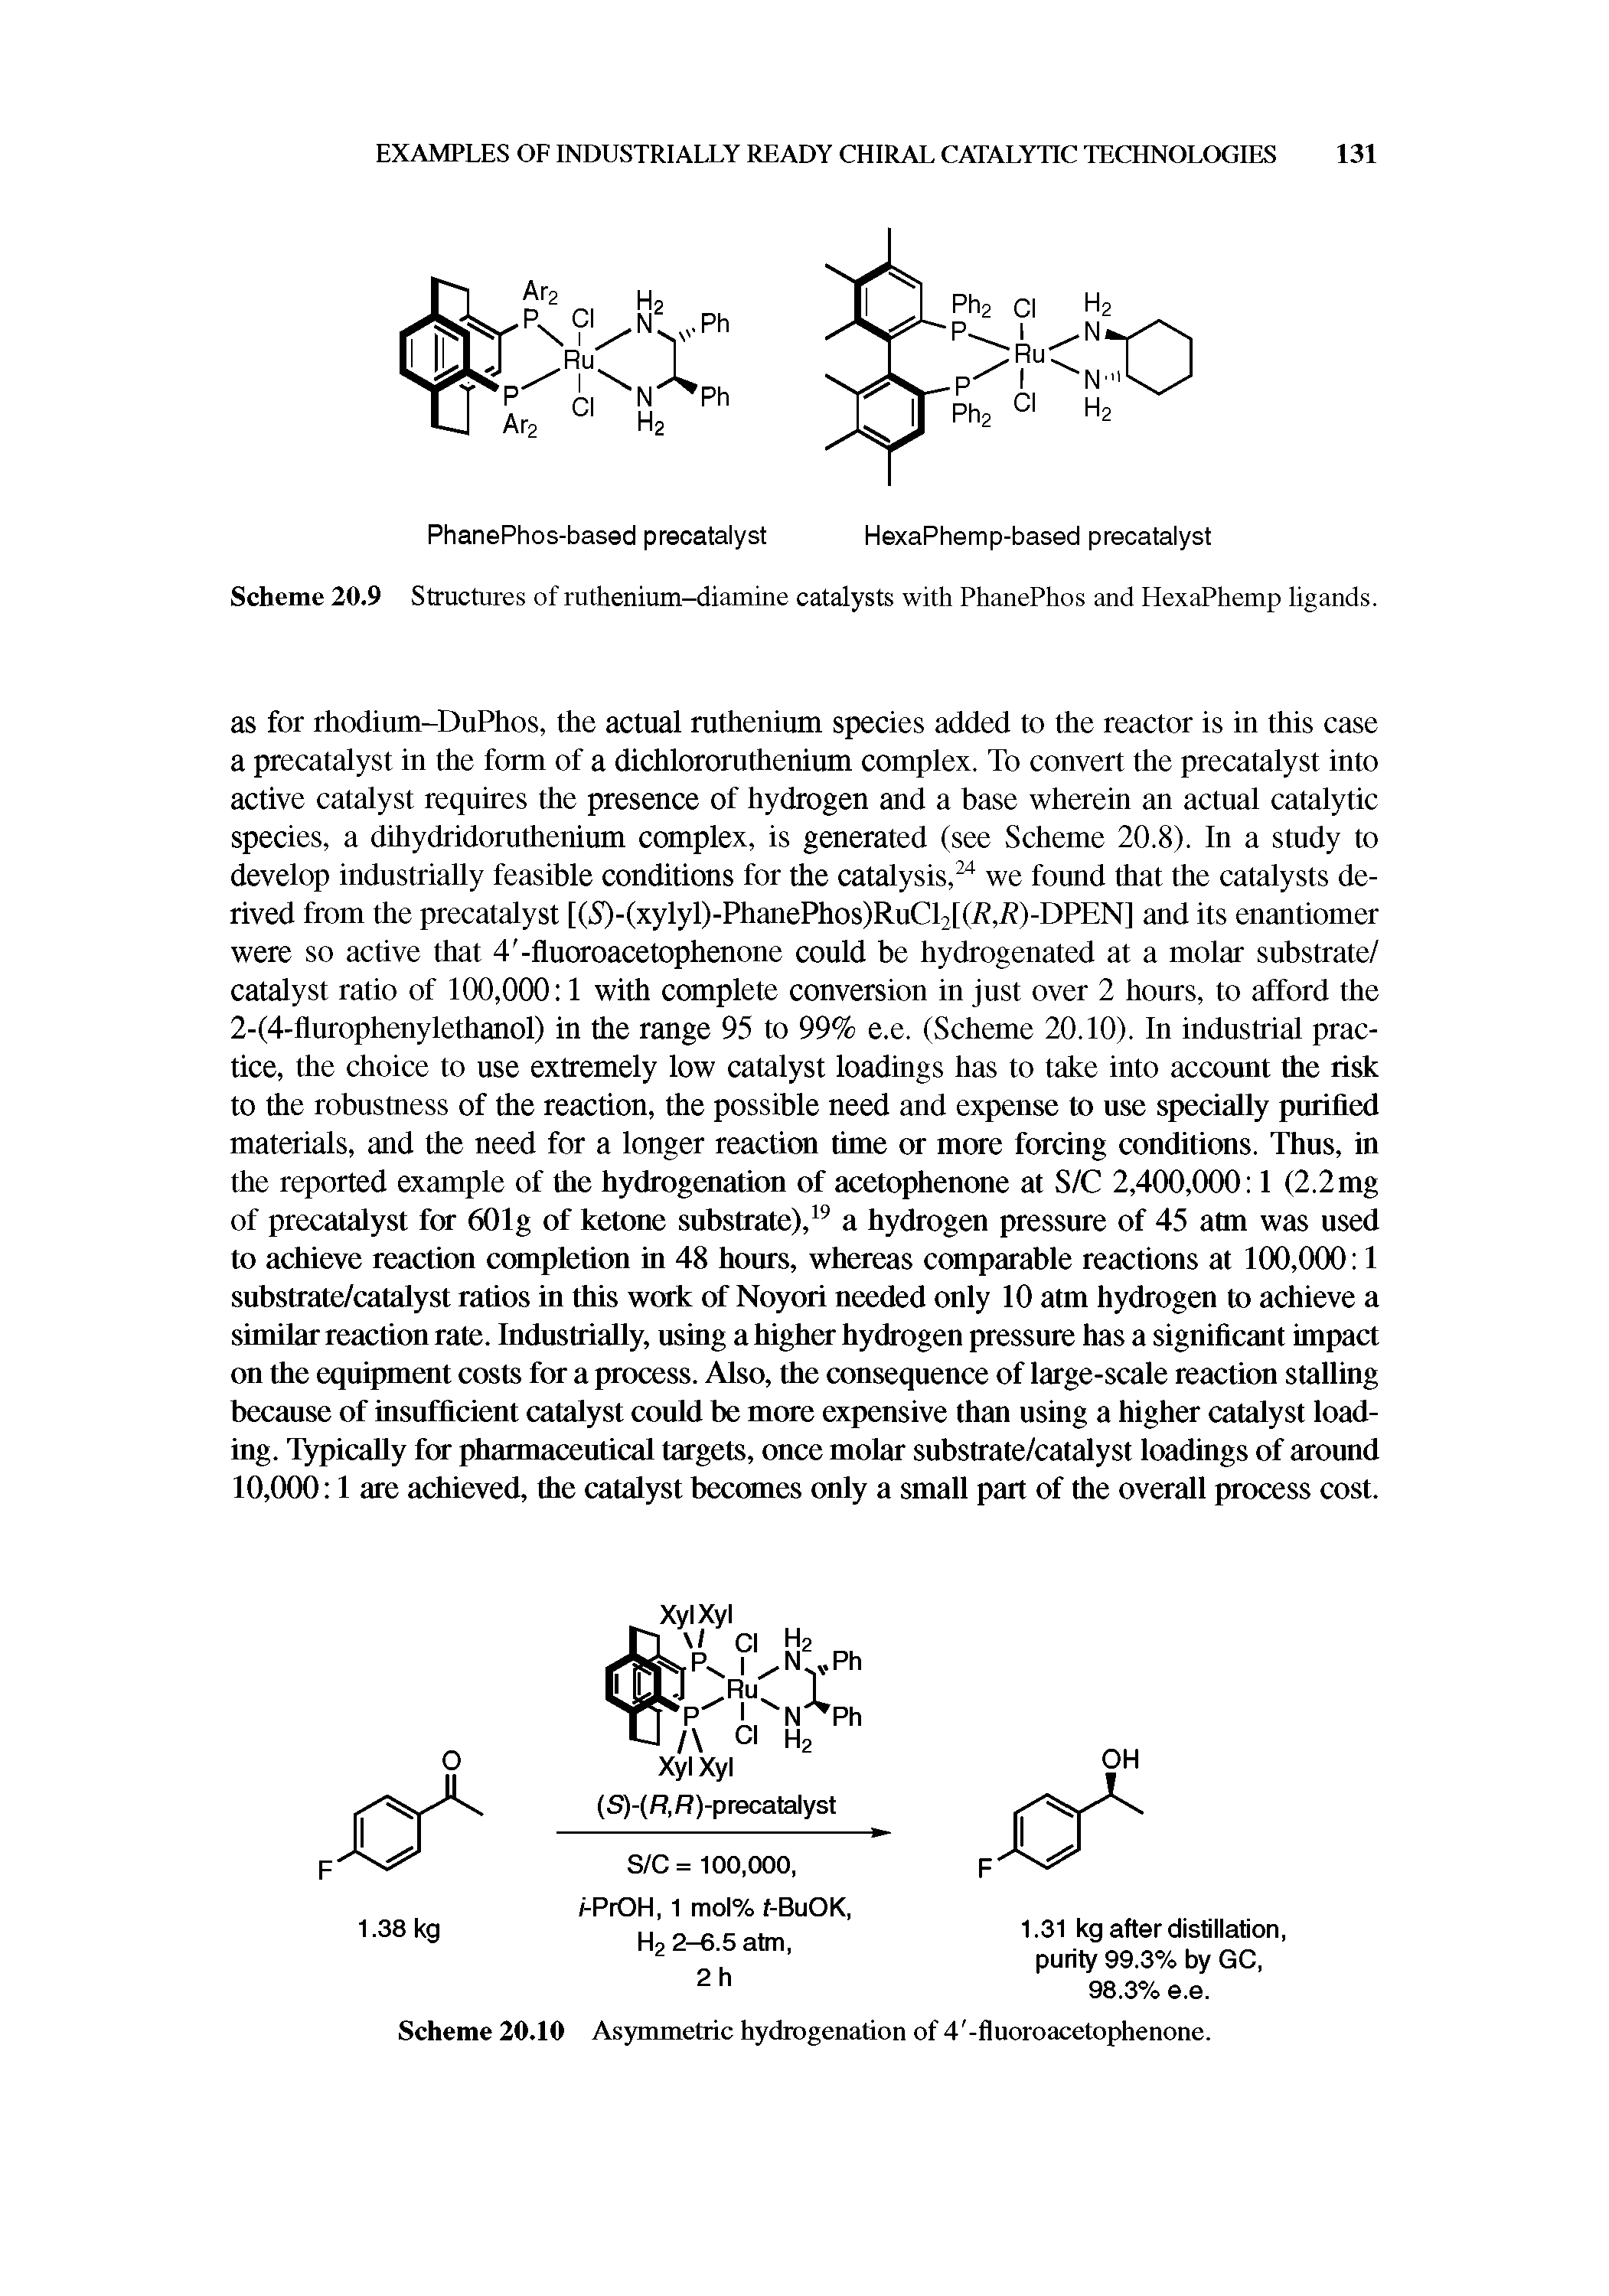 Scheme 20.9 Structures of ruthenium-diamine catalysts with PhanePhos and HexaPhemp ligands.